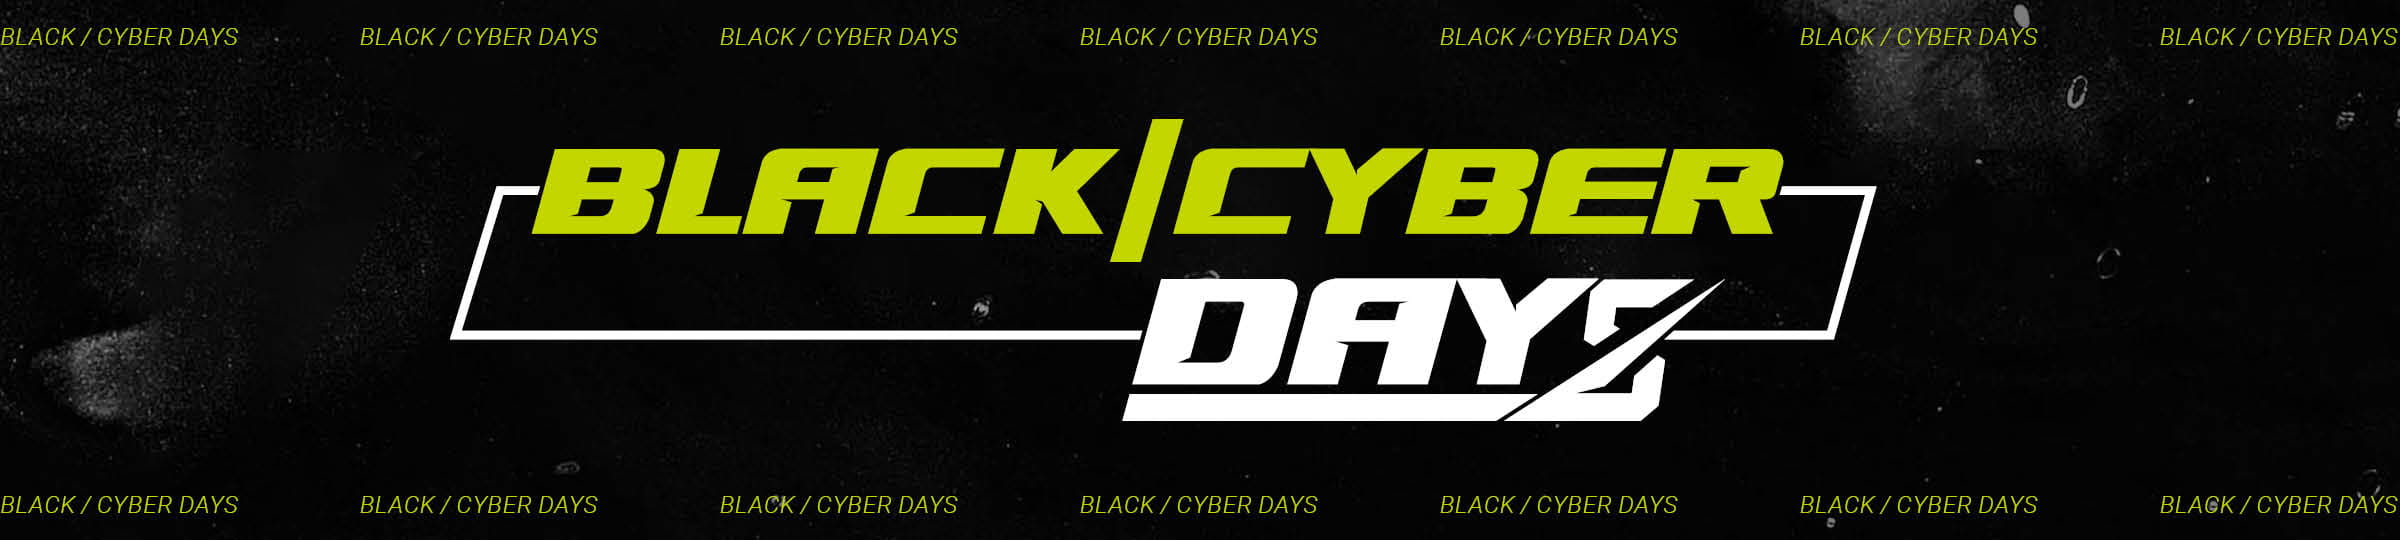 Banner-Black-_-Cyber-Days